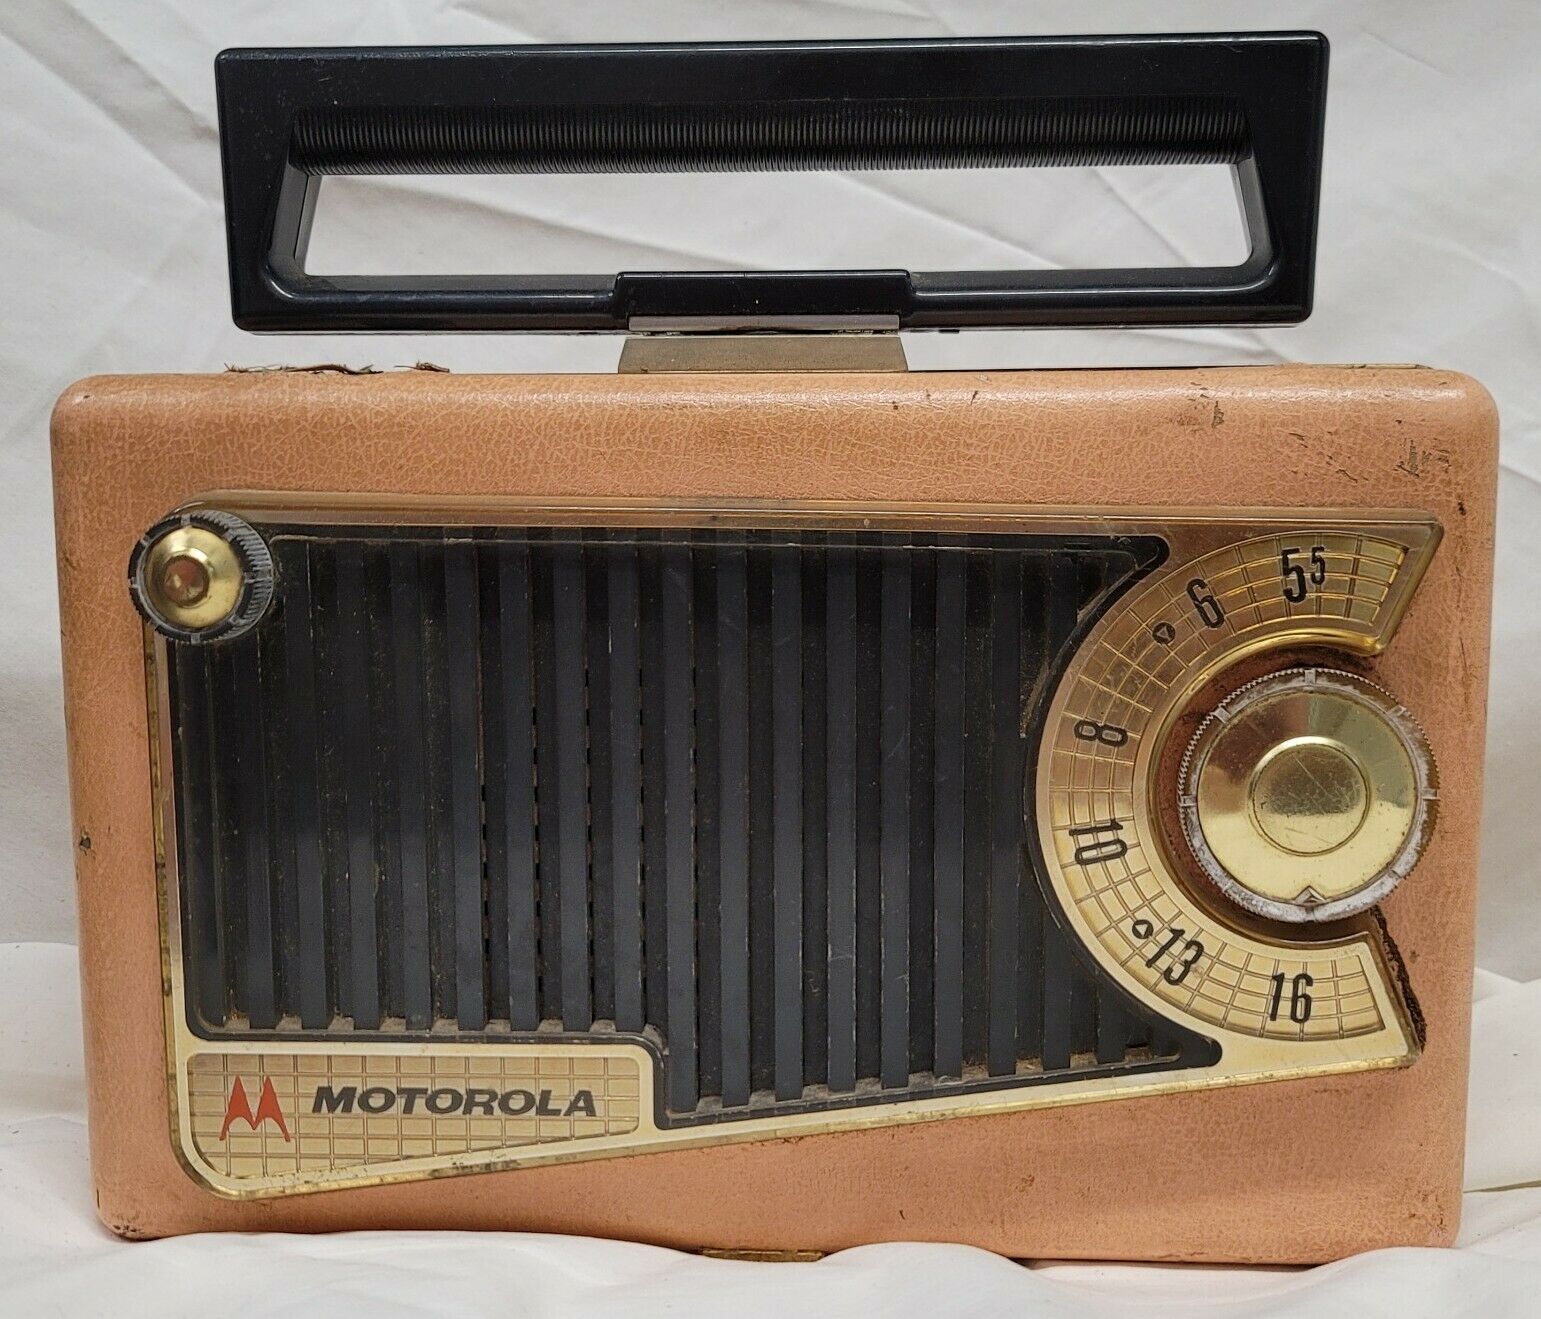 Vintage Radio Motorola Golden Voice Model 56m3 Untested, Needs Cord